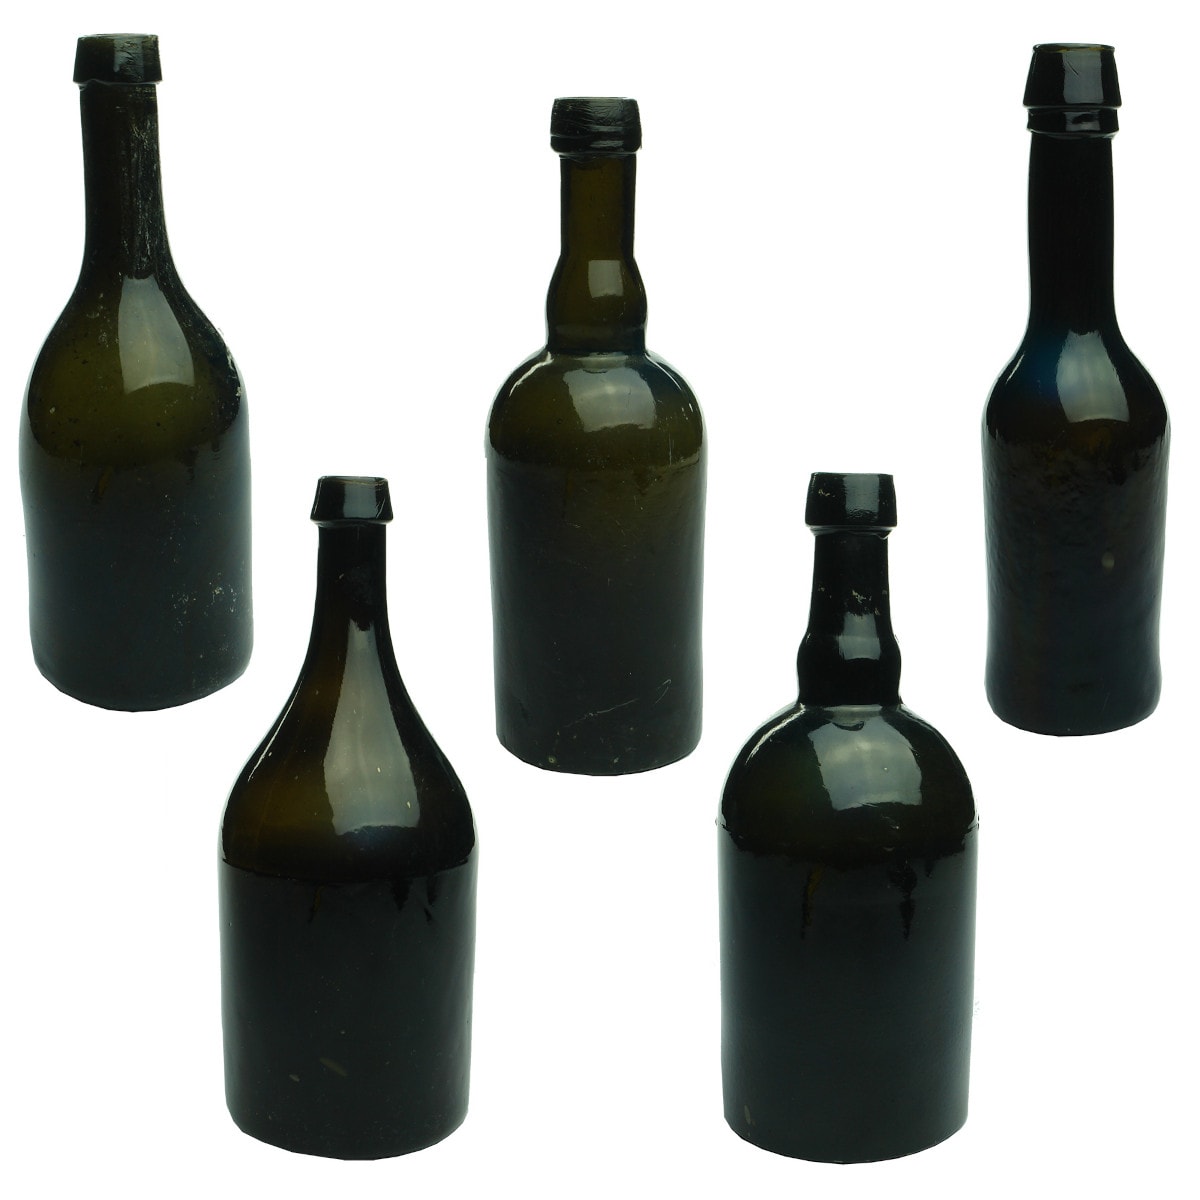 Five Black Glass Bottles: 2 x Thick & Thin; Machen; 2 x Cod Liver Oil.